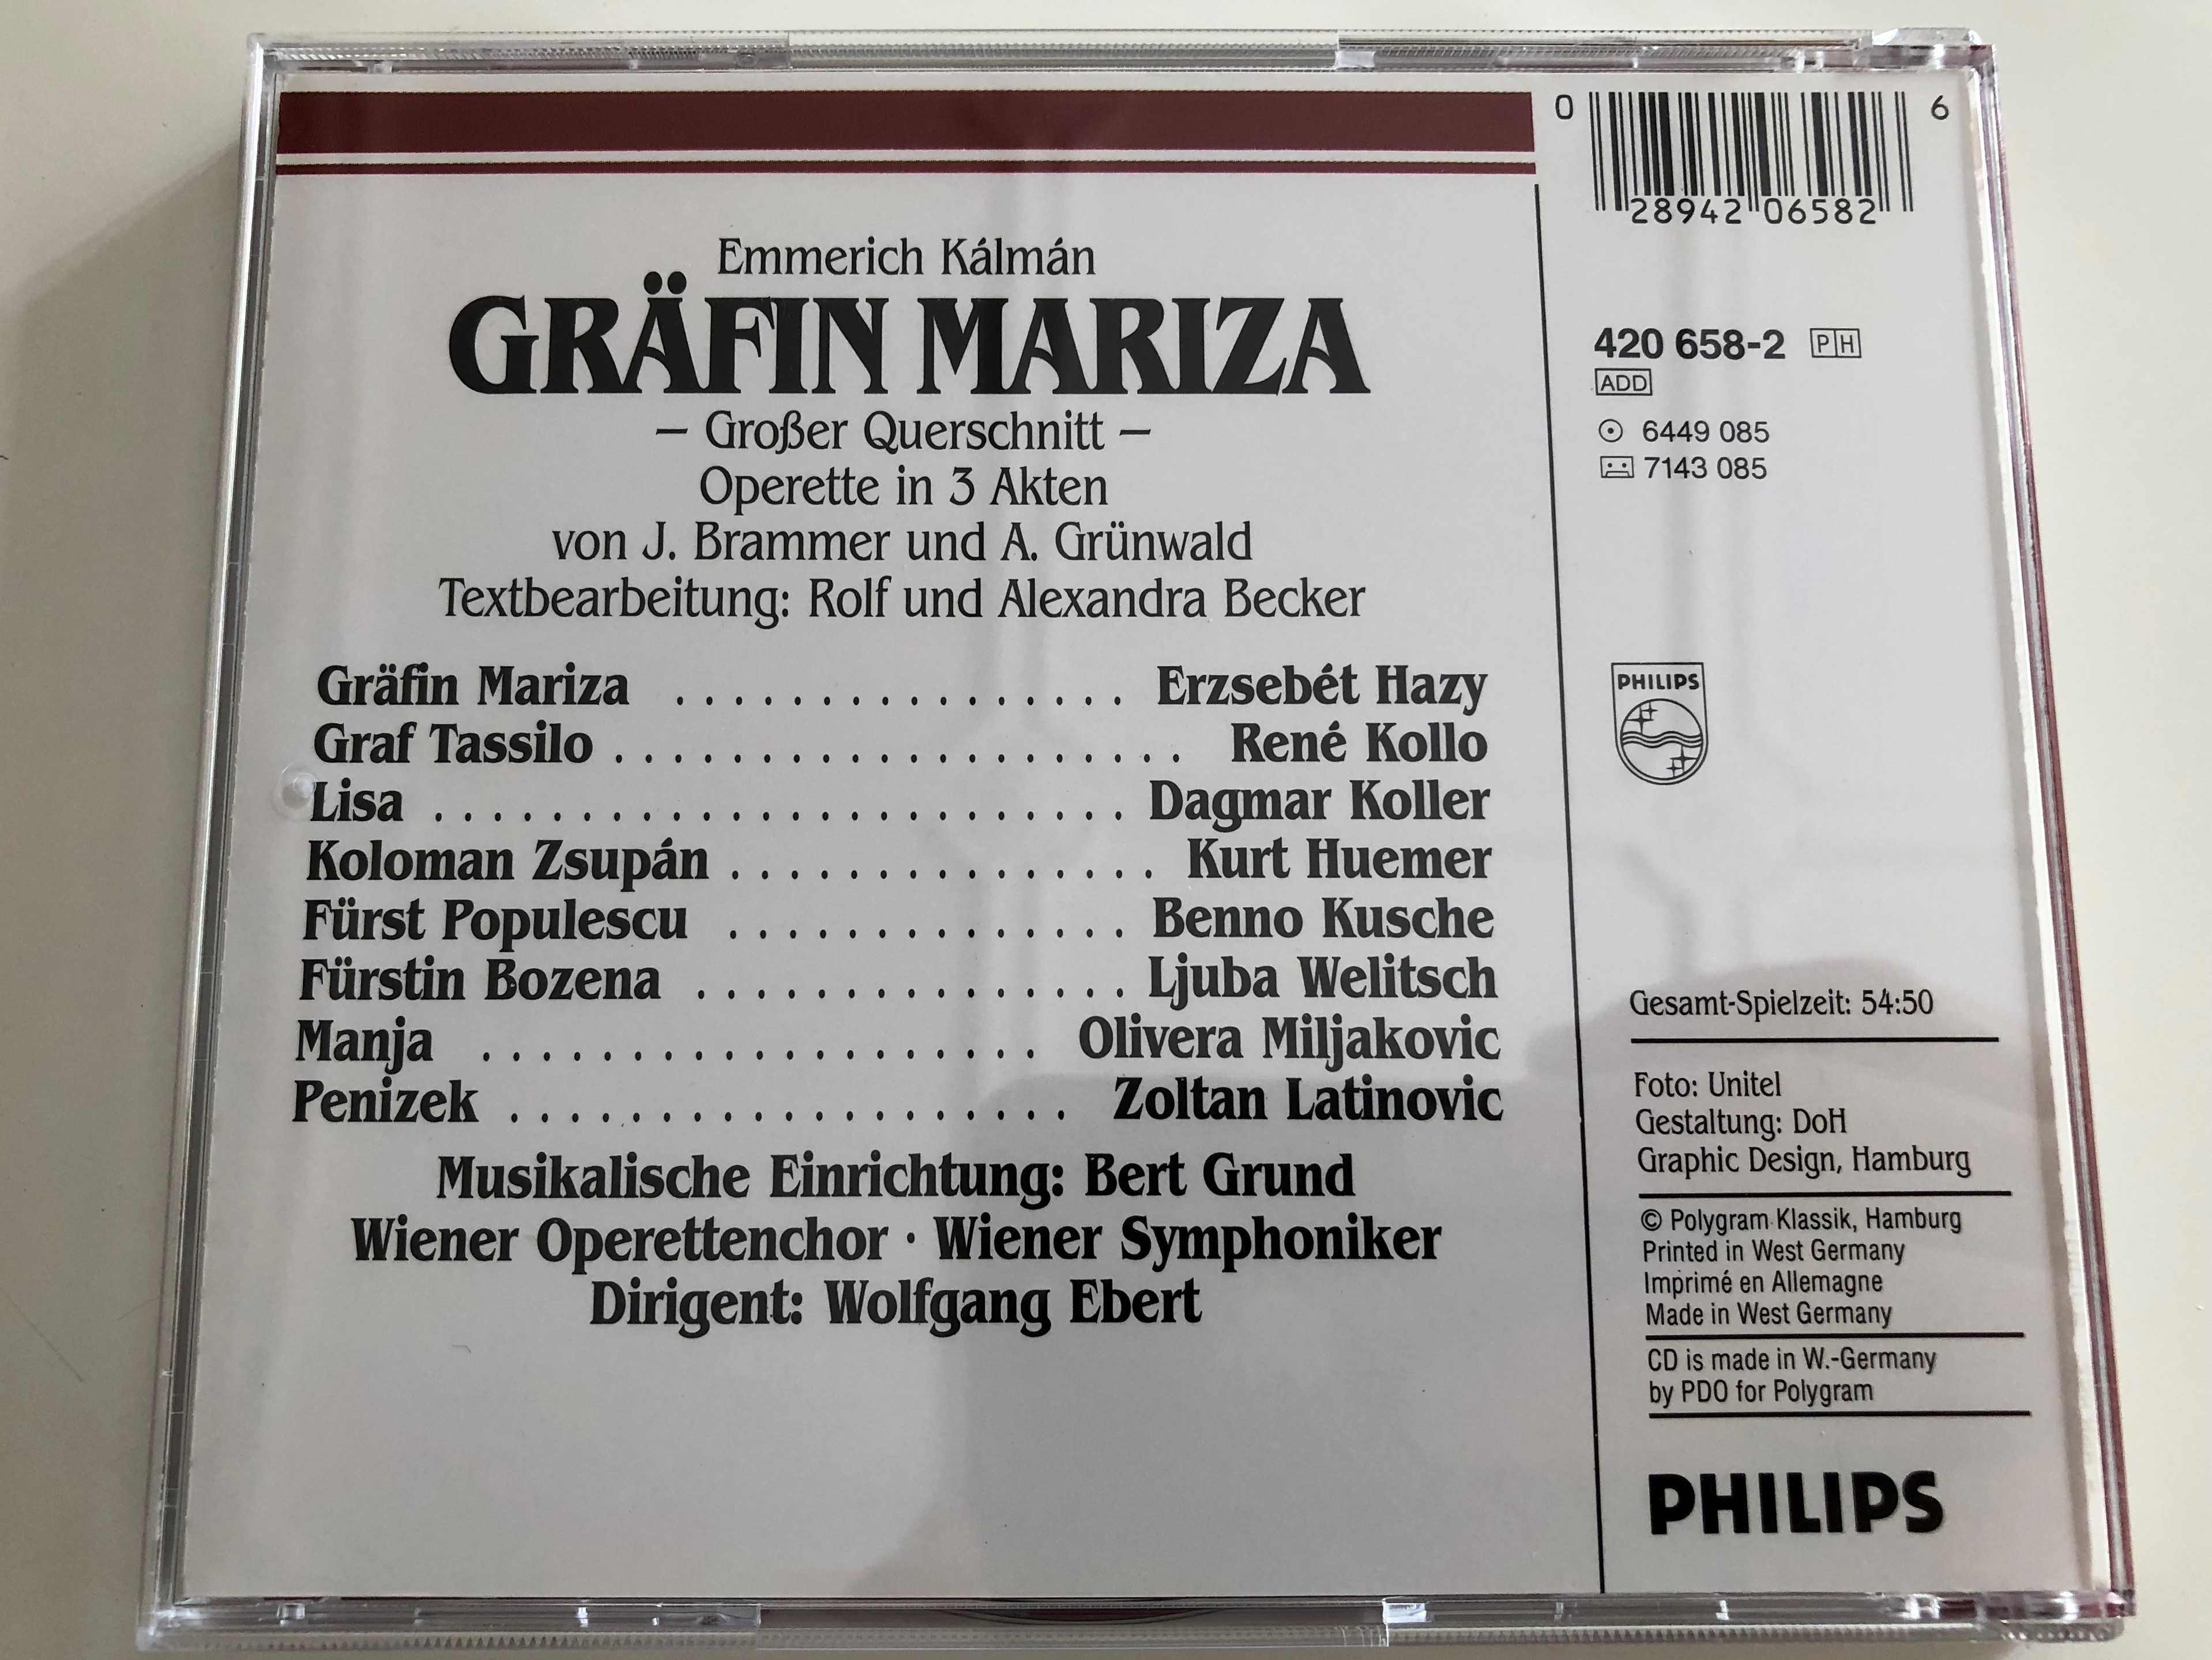 emmerich-k-lm-n-gr-fin-mariza-erzs-bet-h-zy-dagmar-koller-ljuba-welitsch-kurt-huemer-ren-kollo-benno-kusche-u.v.a-wiener-symphoniker-conducted-by-wolfgang-ebert-philips-goldene-operette-audio-cd-8-.jpg